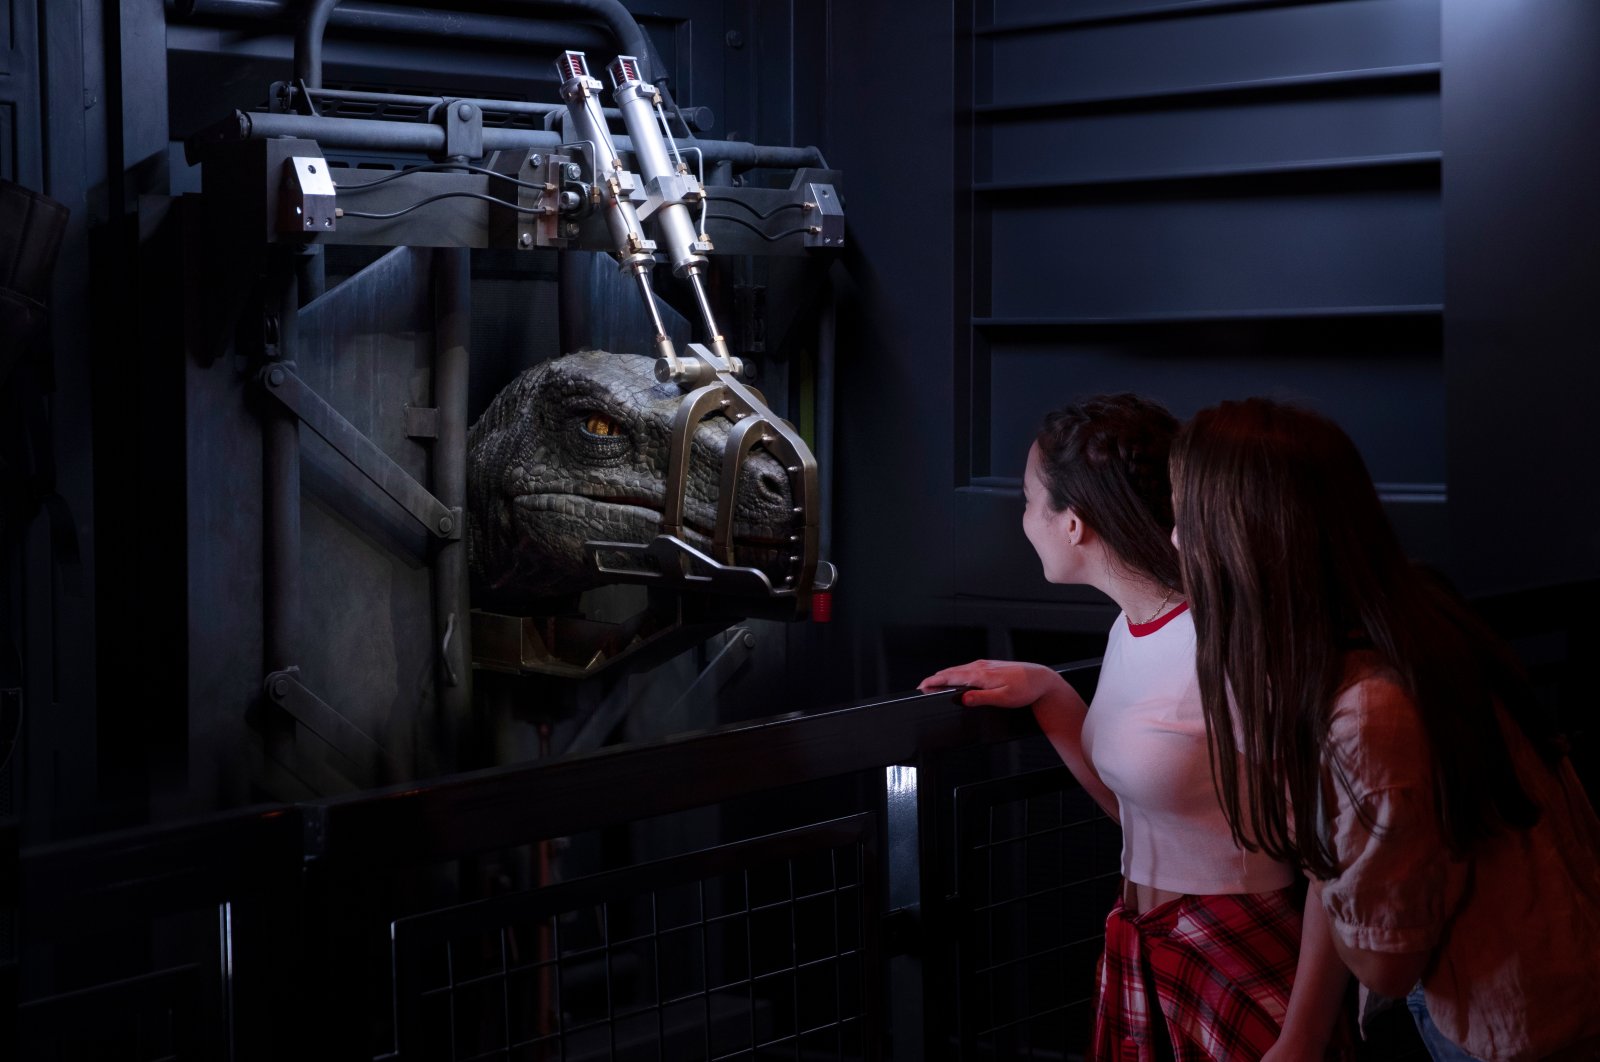 Universal Studios: Delve into ’Jurassic World,’ escape rooms, haunted houses